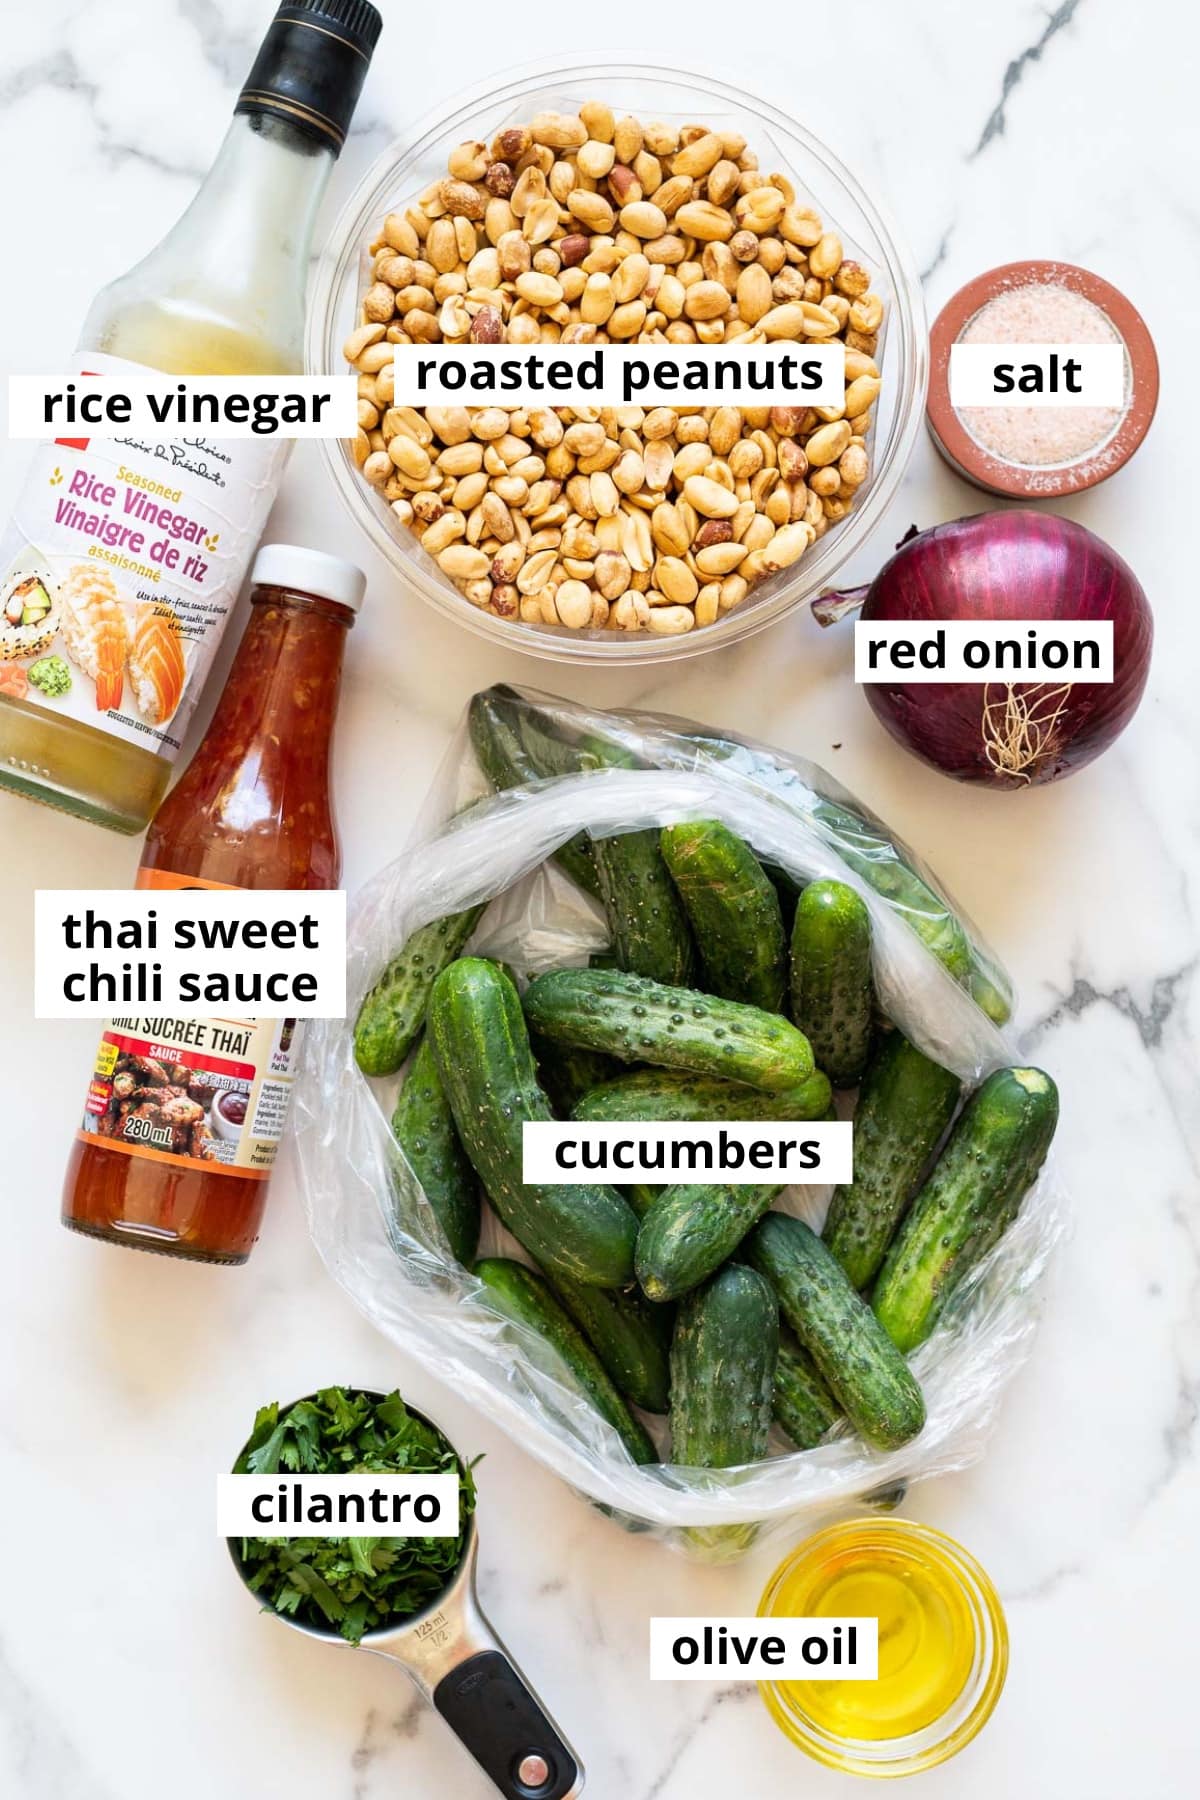 Roasted peanuts, cucumbers, rice vinegar, Thai sweet chili sauce, red onion, salt, cilantro and olive oil.